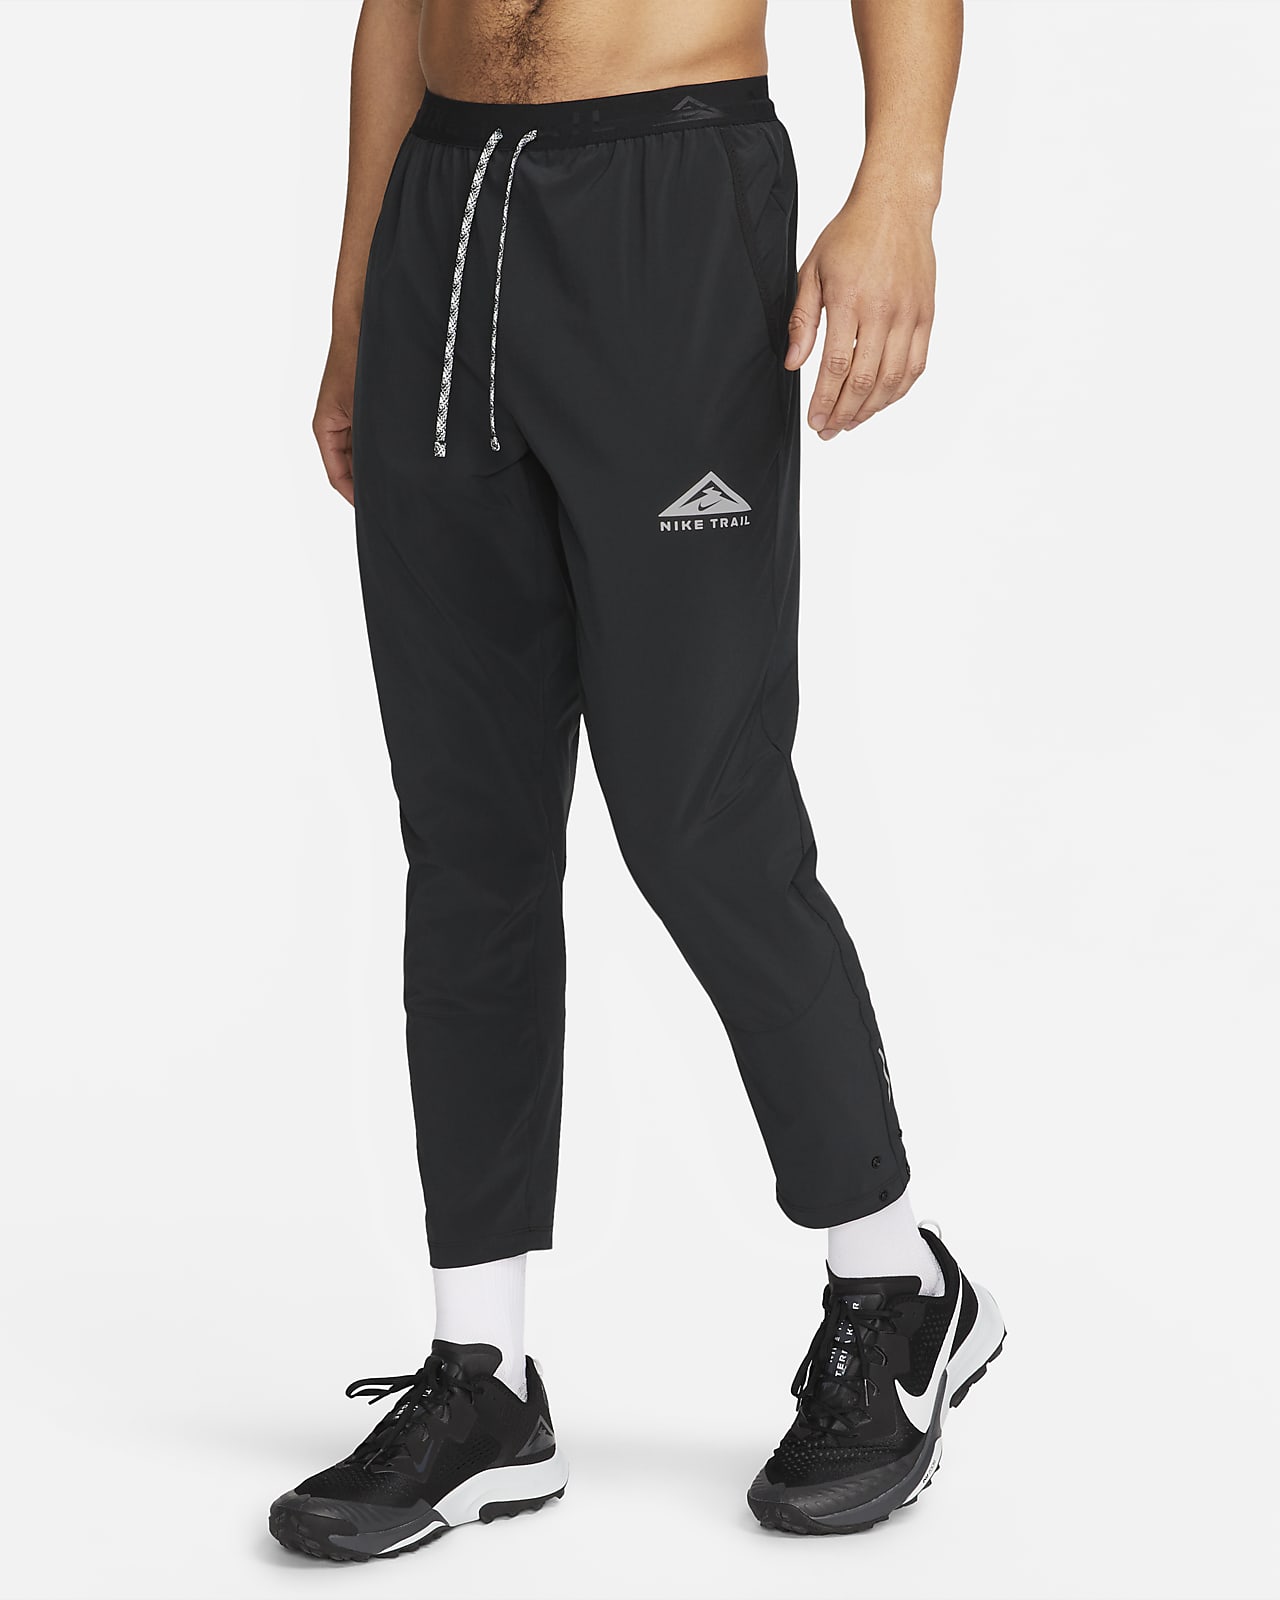 Buy Nike Dri-FIT Swift Men's Running Tights CZ8835-010 (Black), Black,  XX-Large at Amazon.in